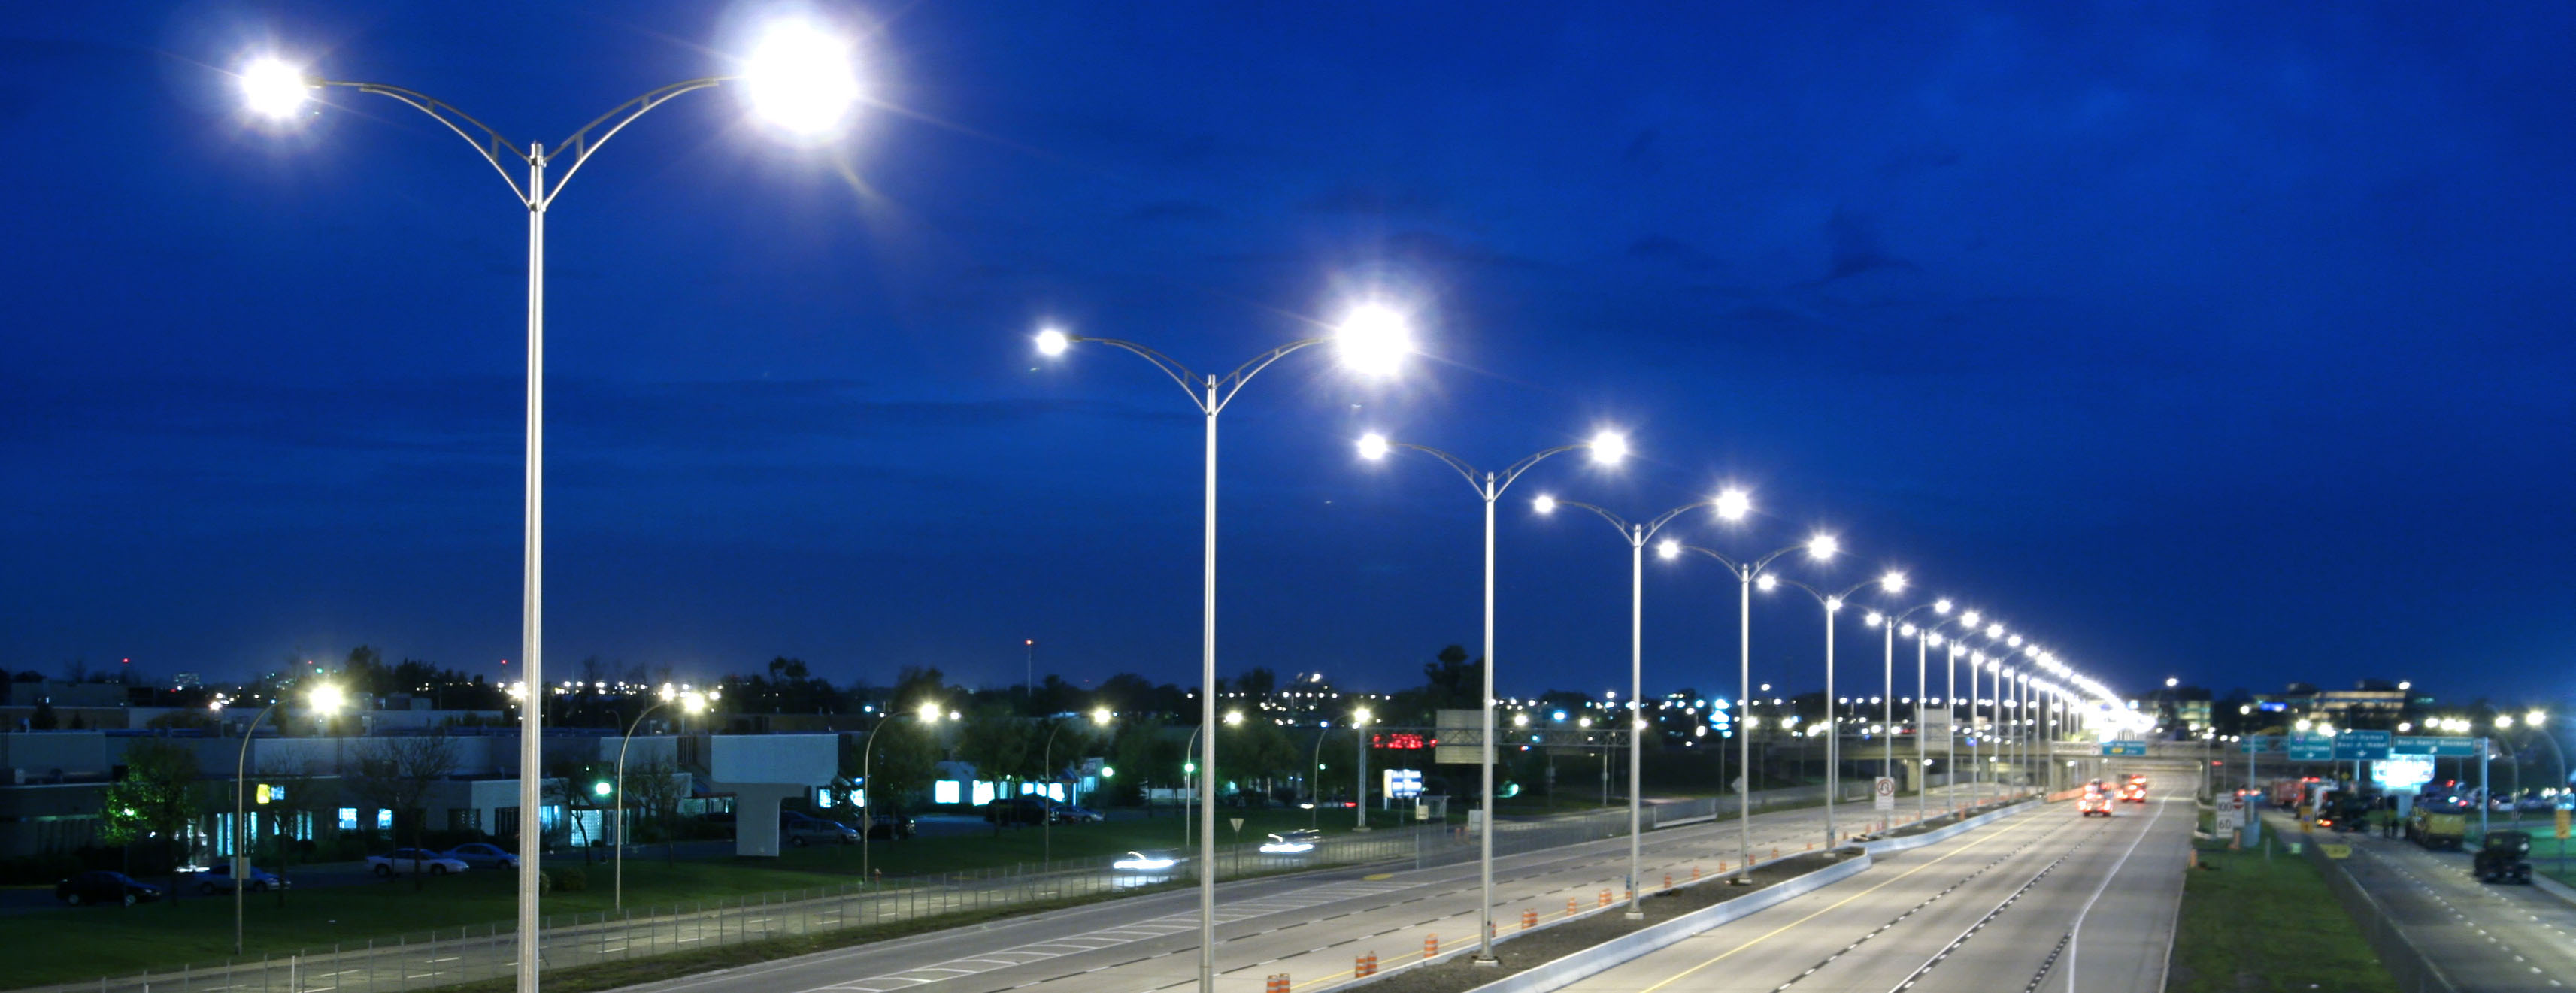 Smart Street Lights: How IoT Lighting Enhances Public Safety - StateTech